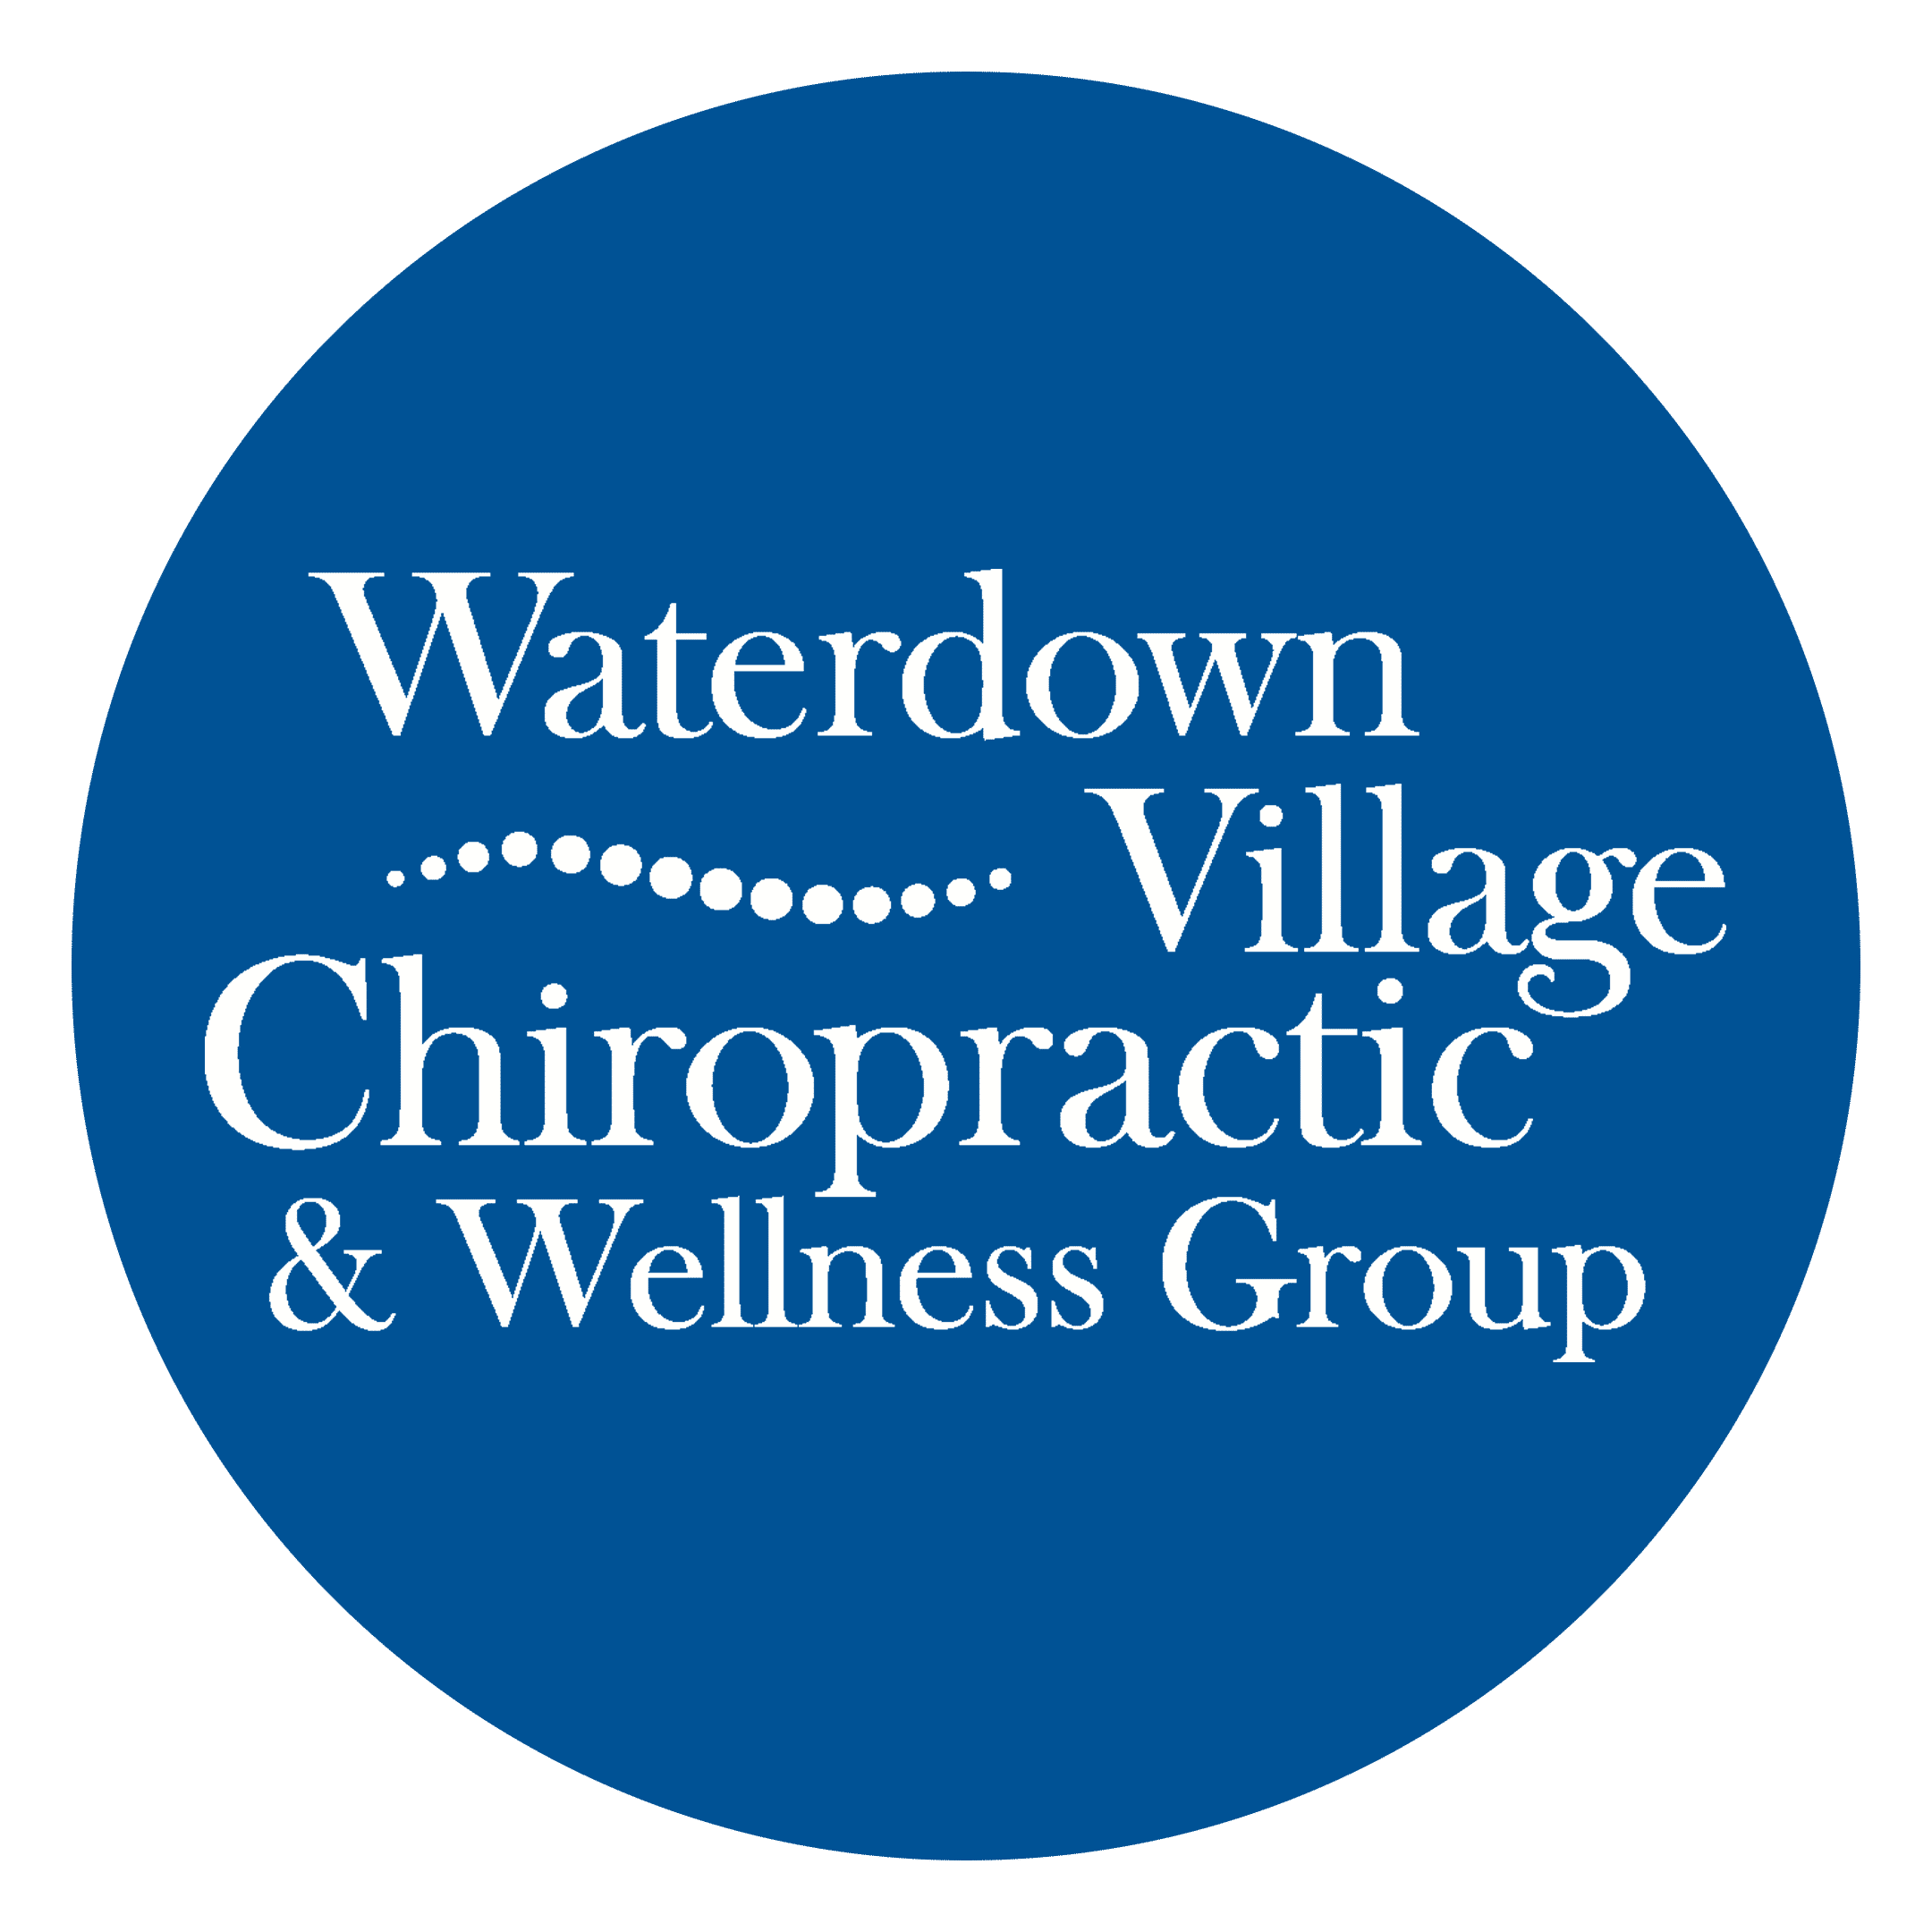 Waterdown Village Chiropractic & Wellness Group